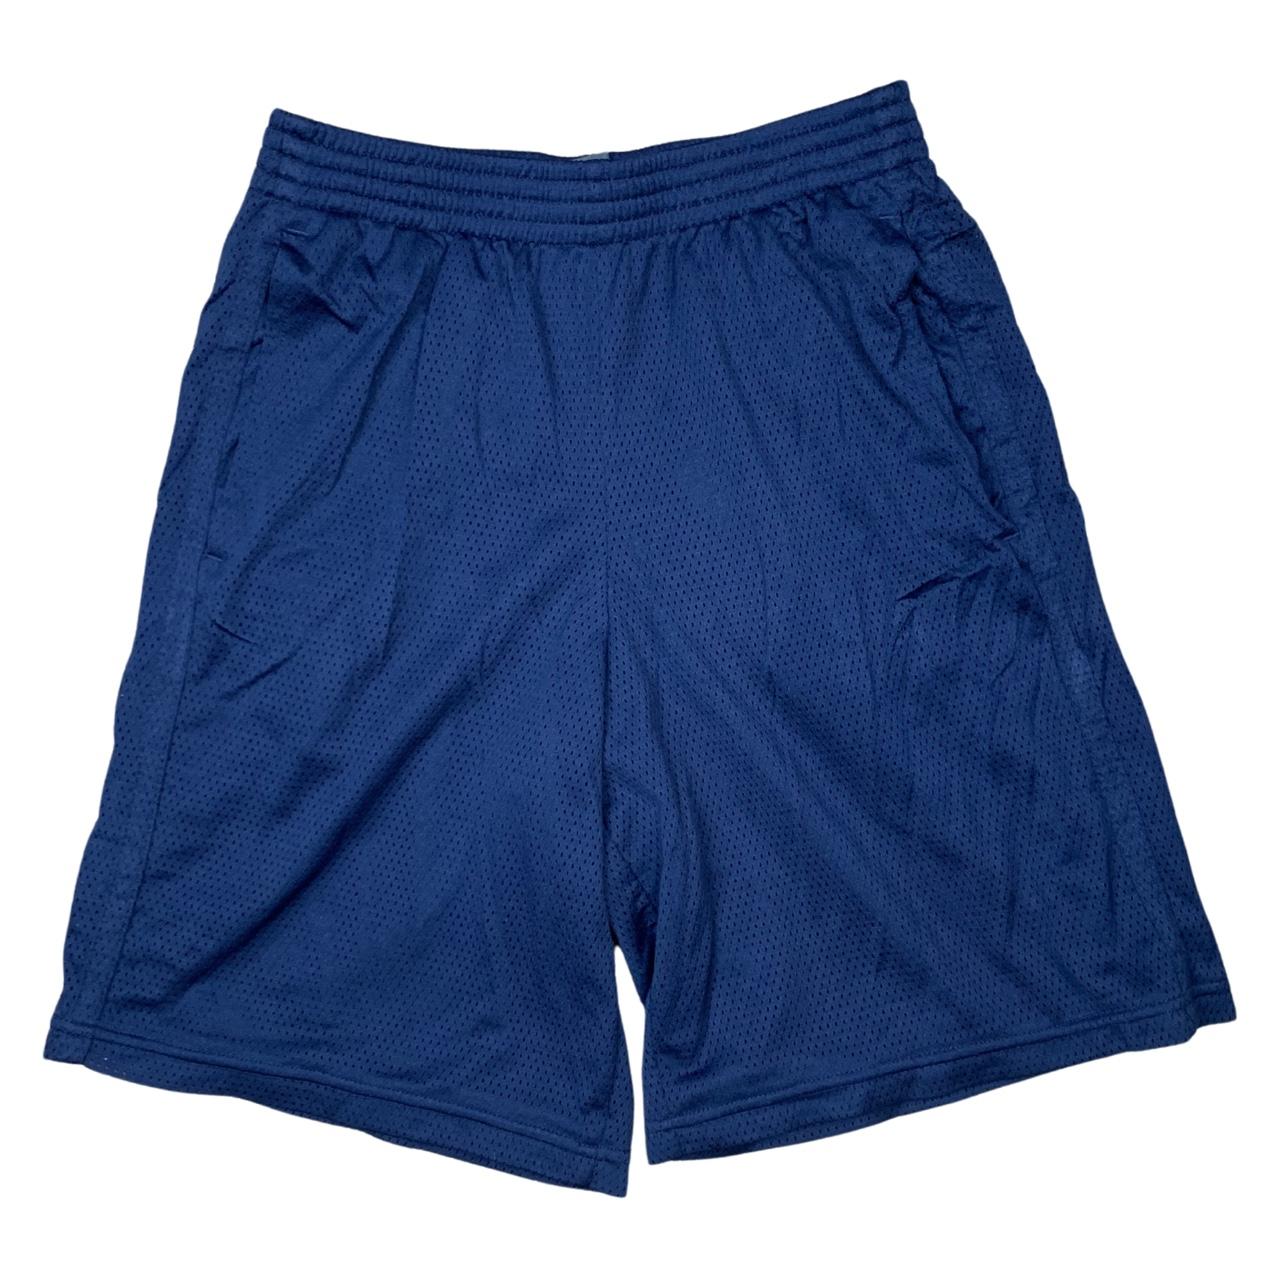 Classic Retro Champion Blue Shorts w/ Embroidered... - Depop